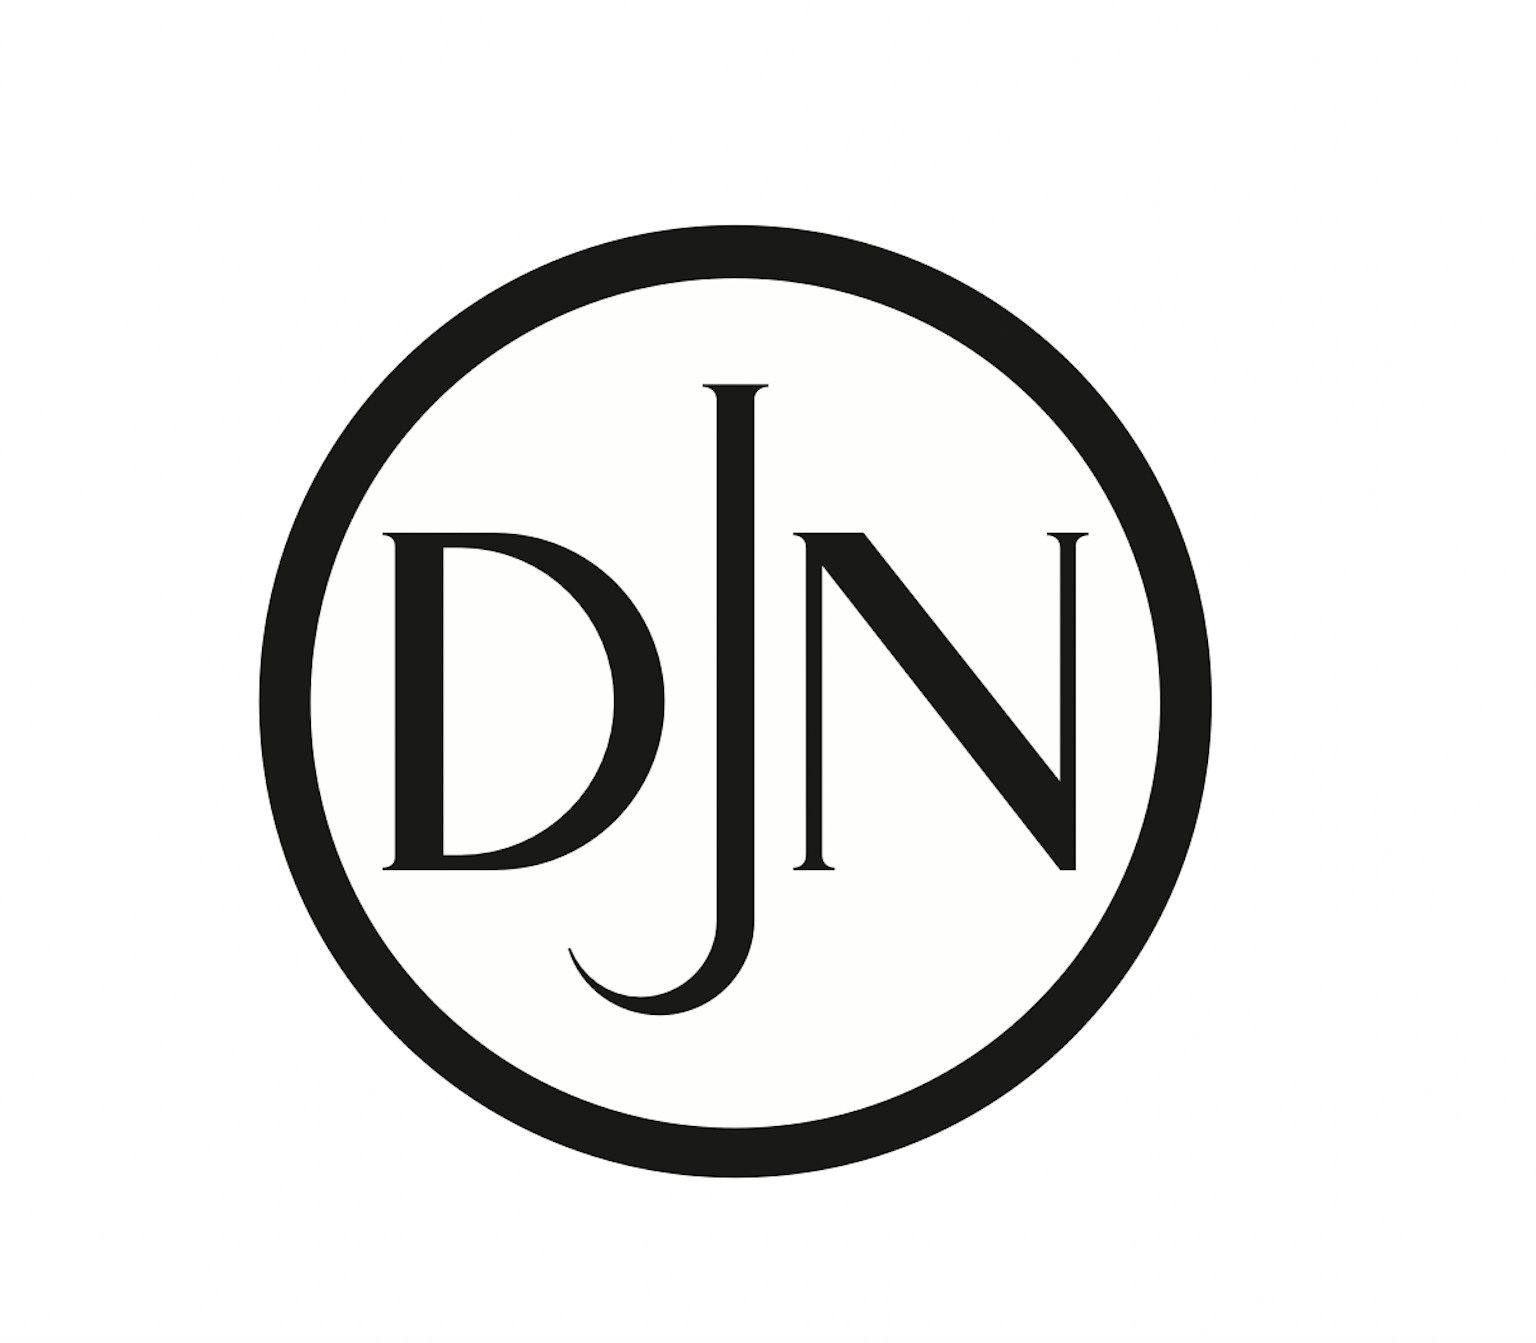 JDN logo